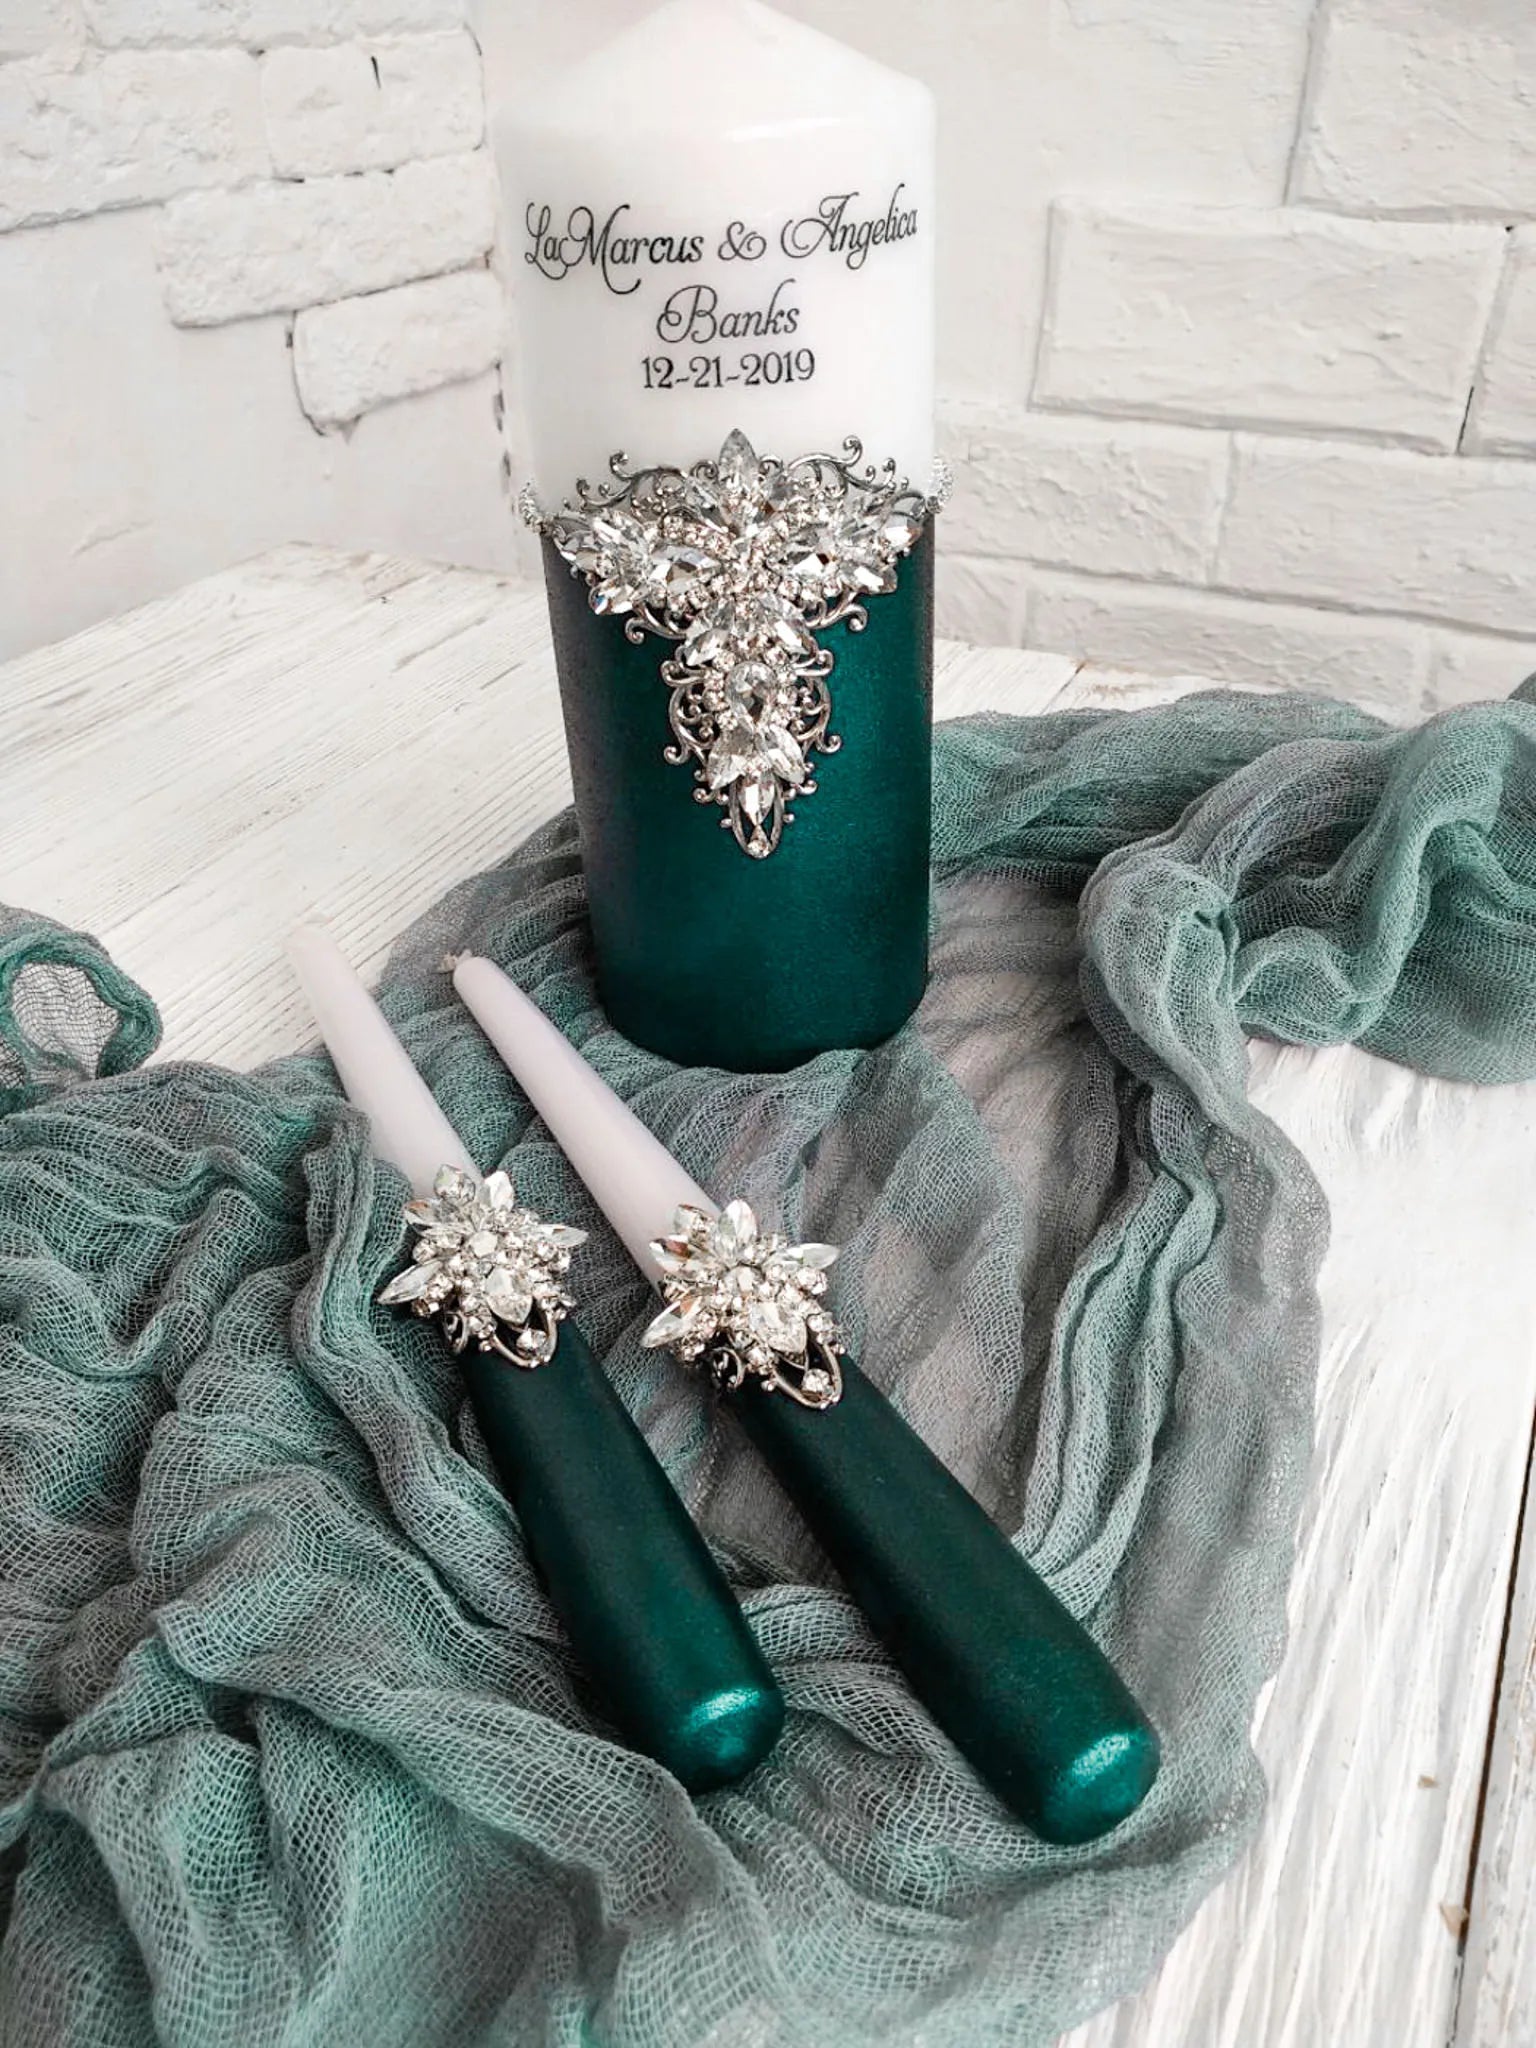 Stunning emerald-themed wedding champagne flutes